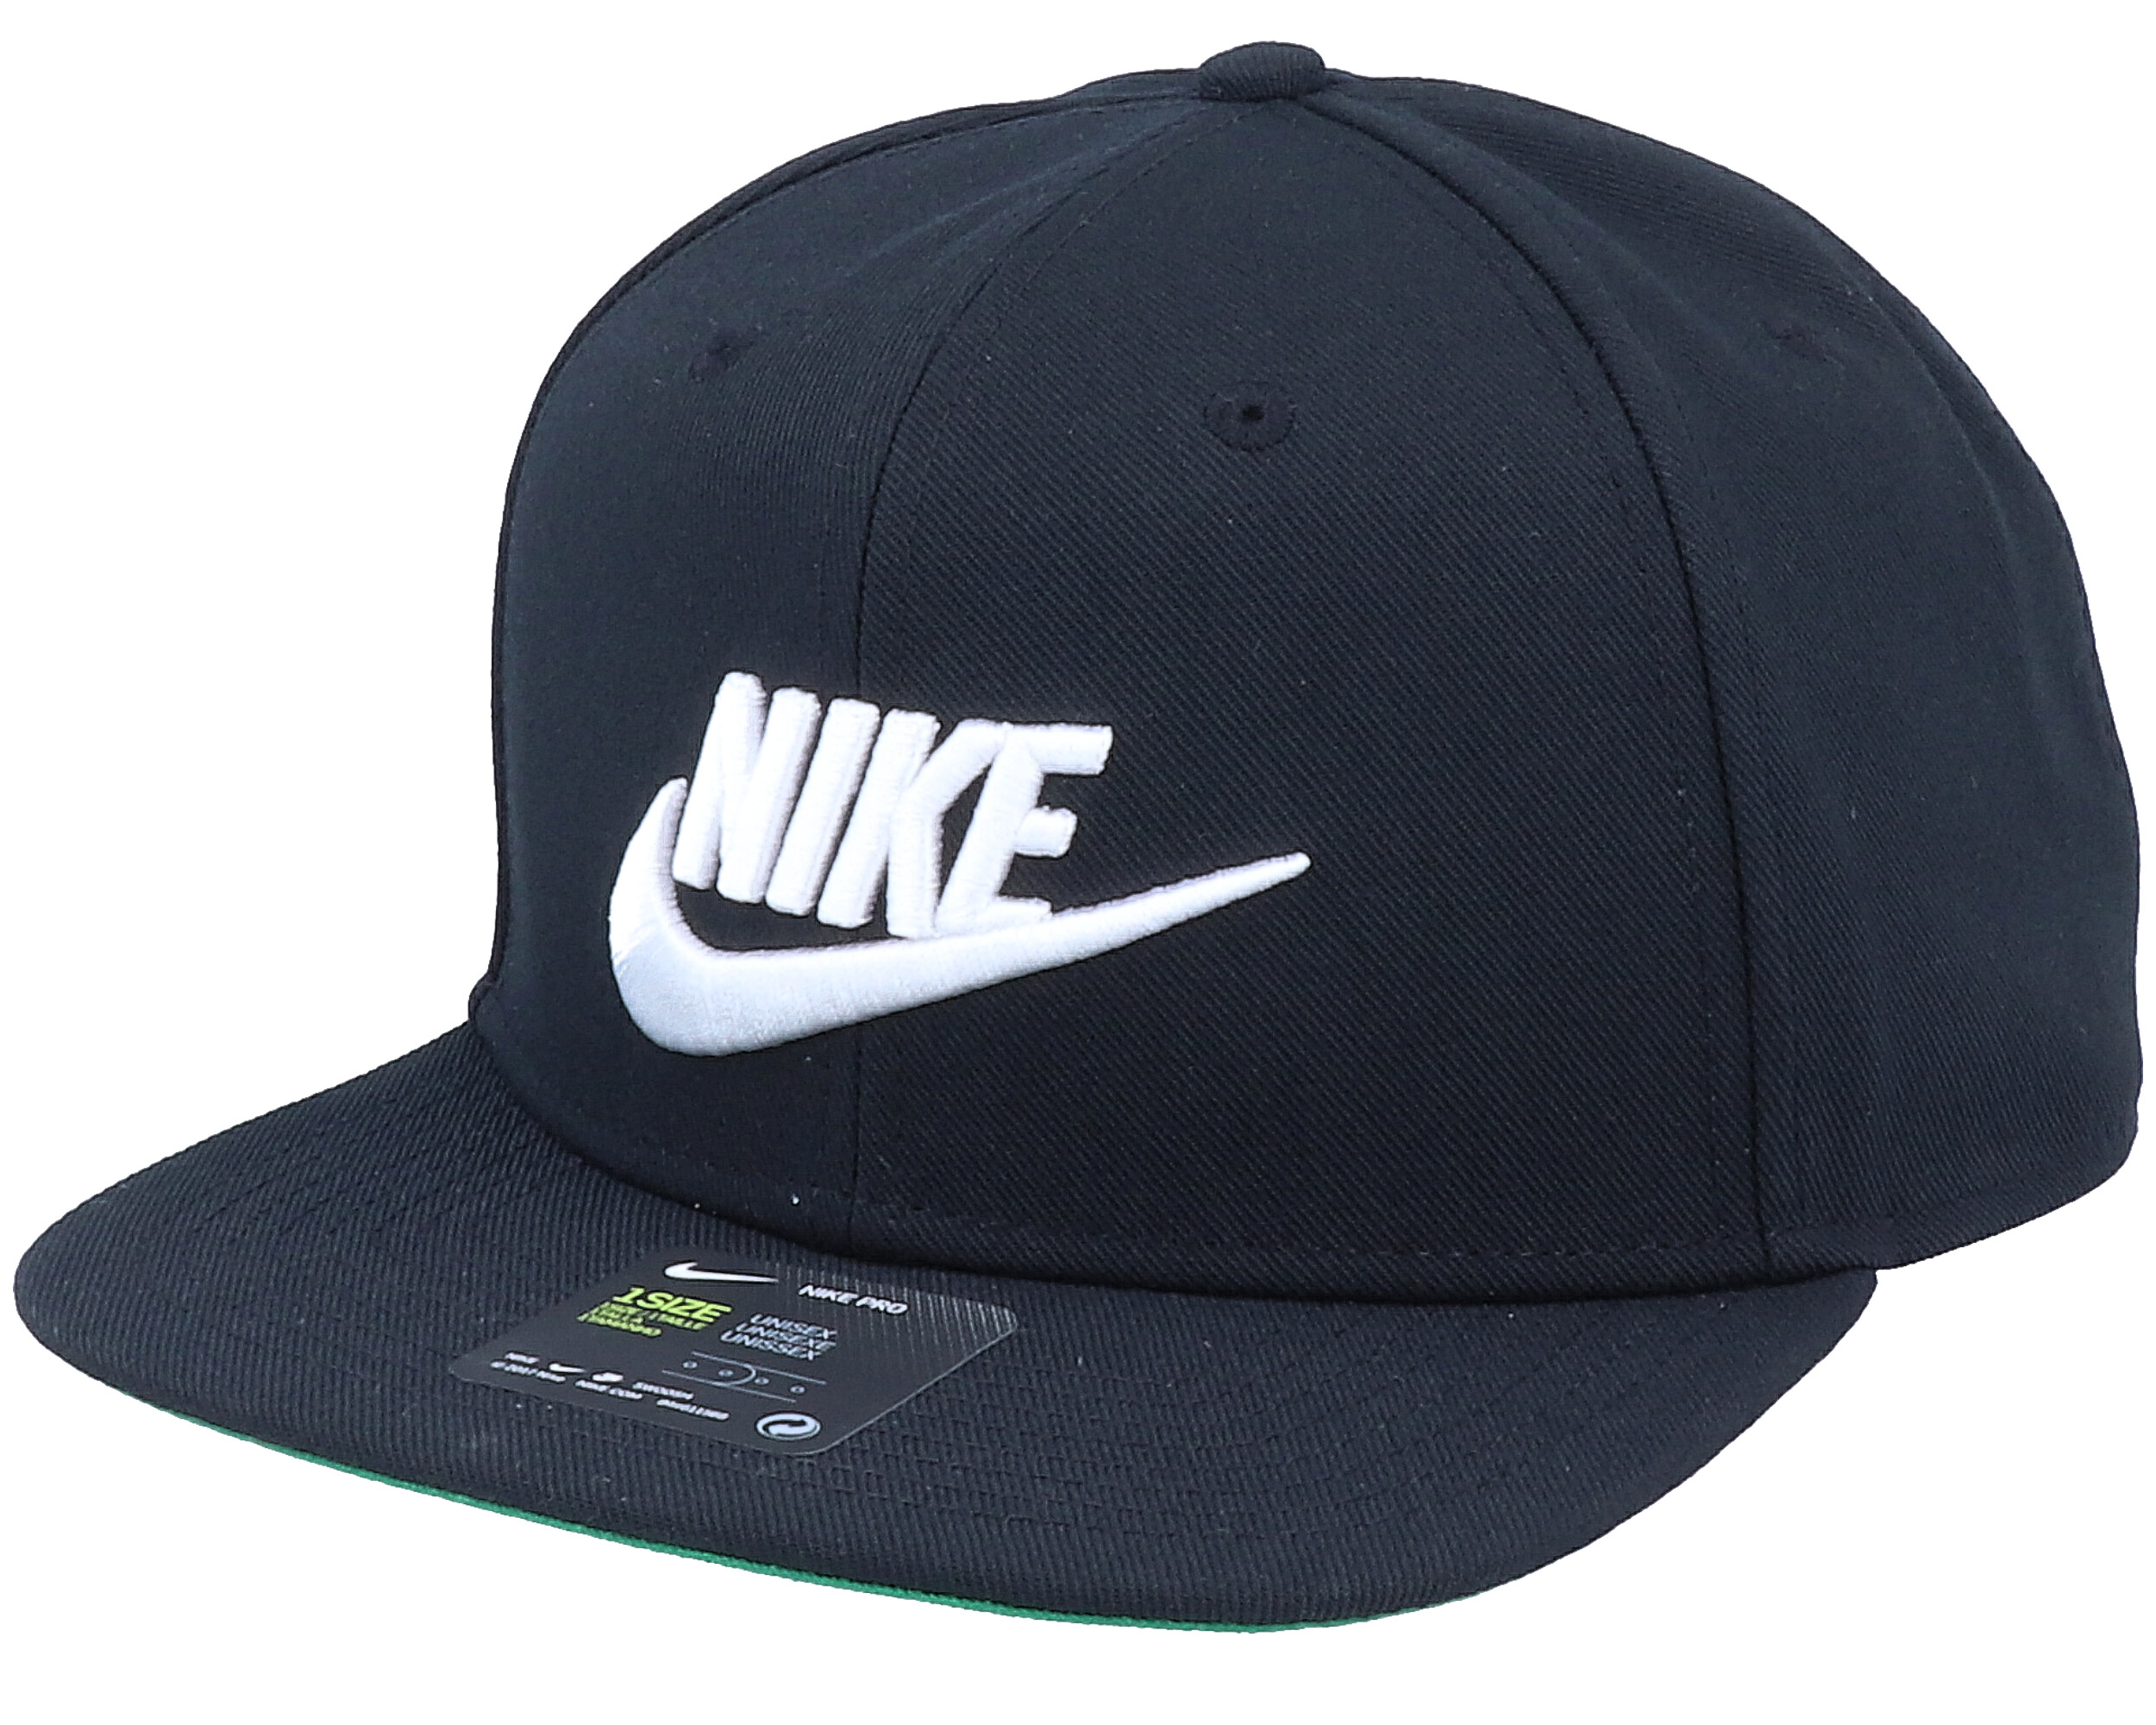 Pro Sportswear Cap Black/White Snapback - Nike caps - Hatstore.sg